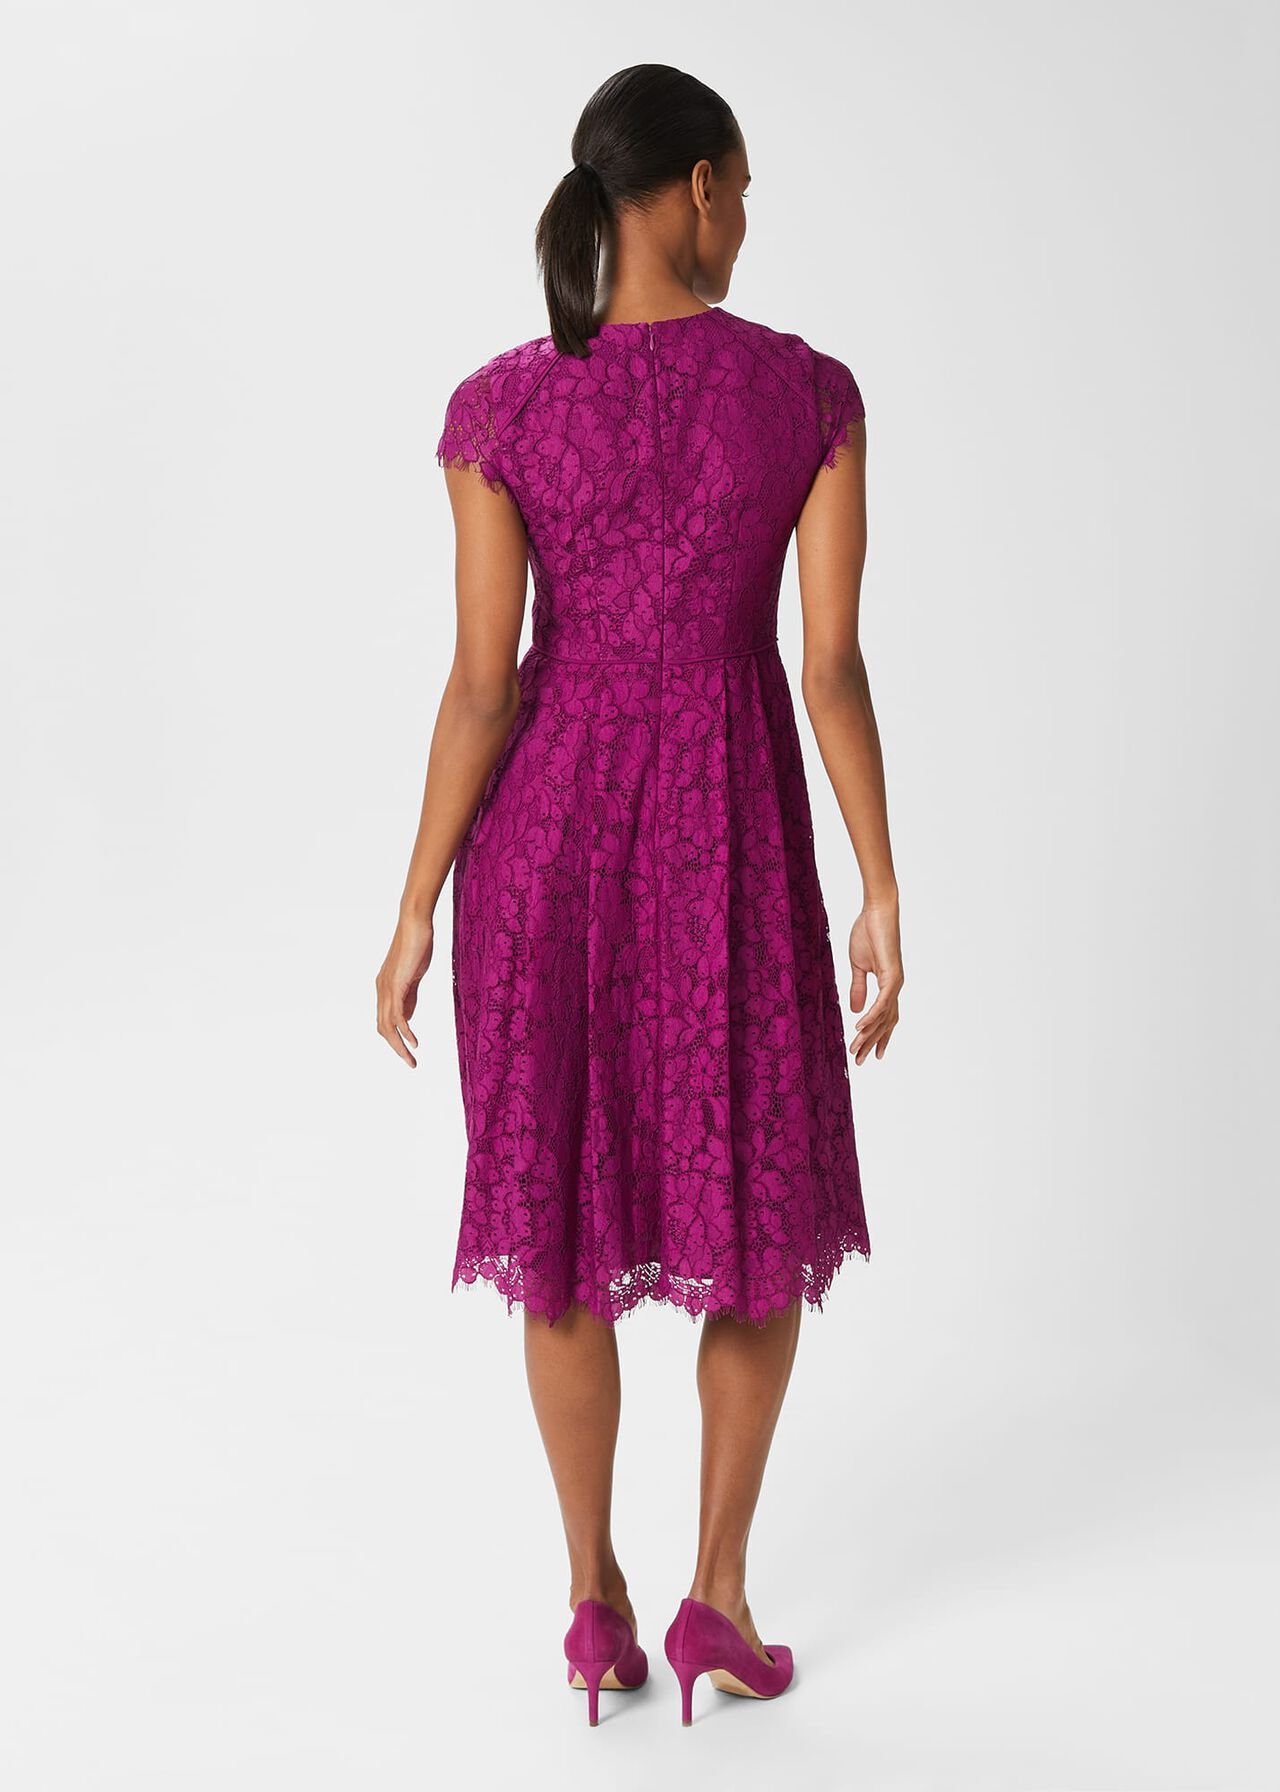 Rosaleen Lace Shift Dress, Berry Purple, hi-res